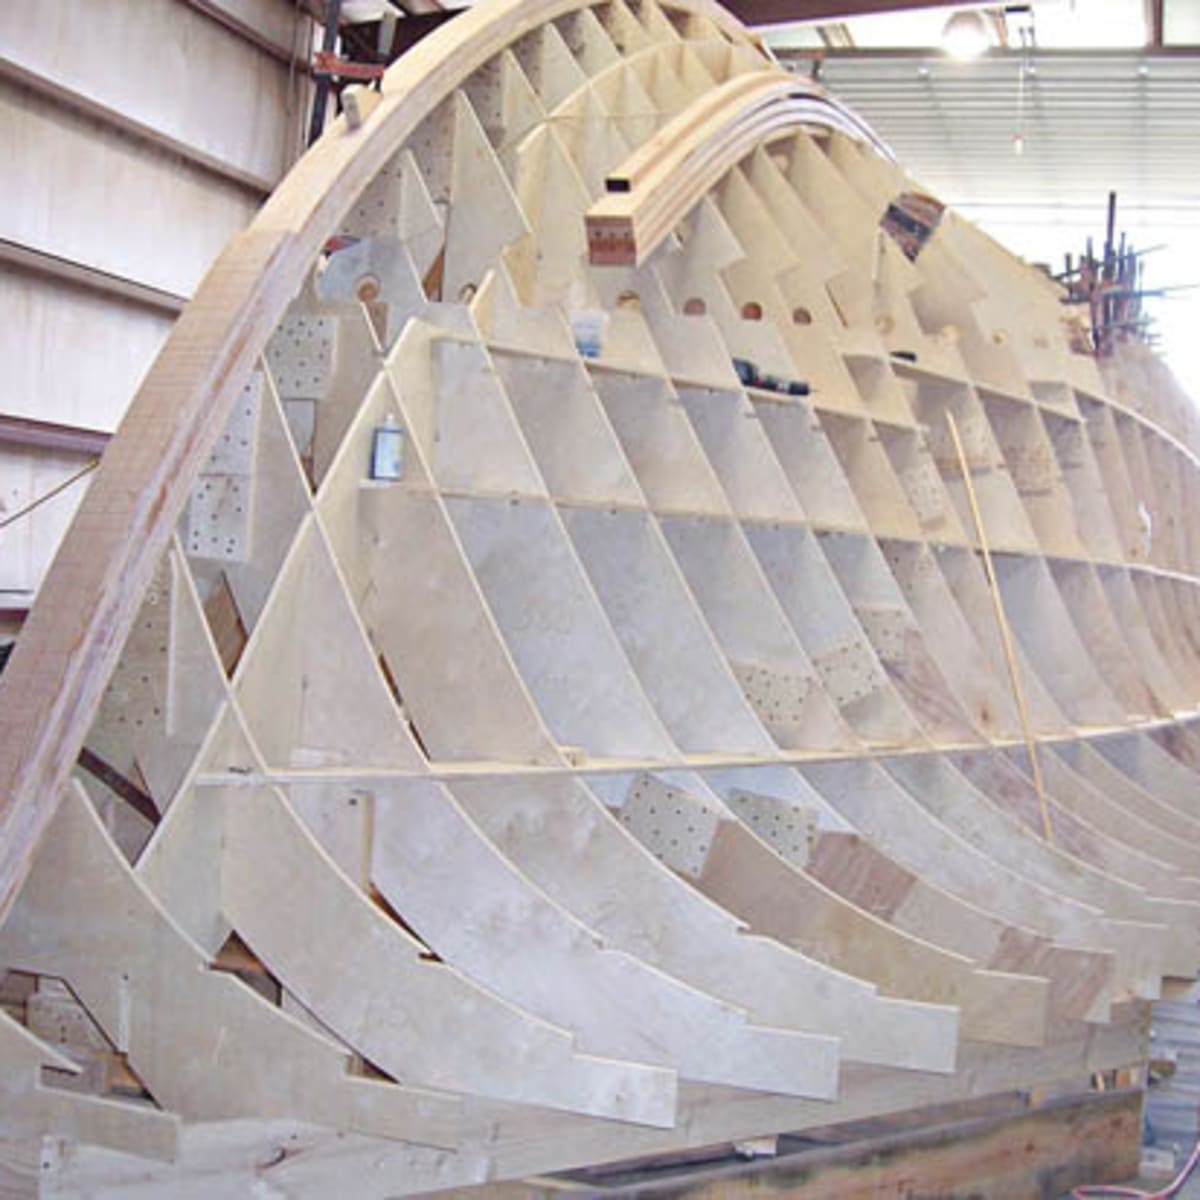 Model Boat Building Methods